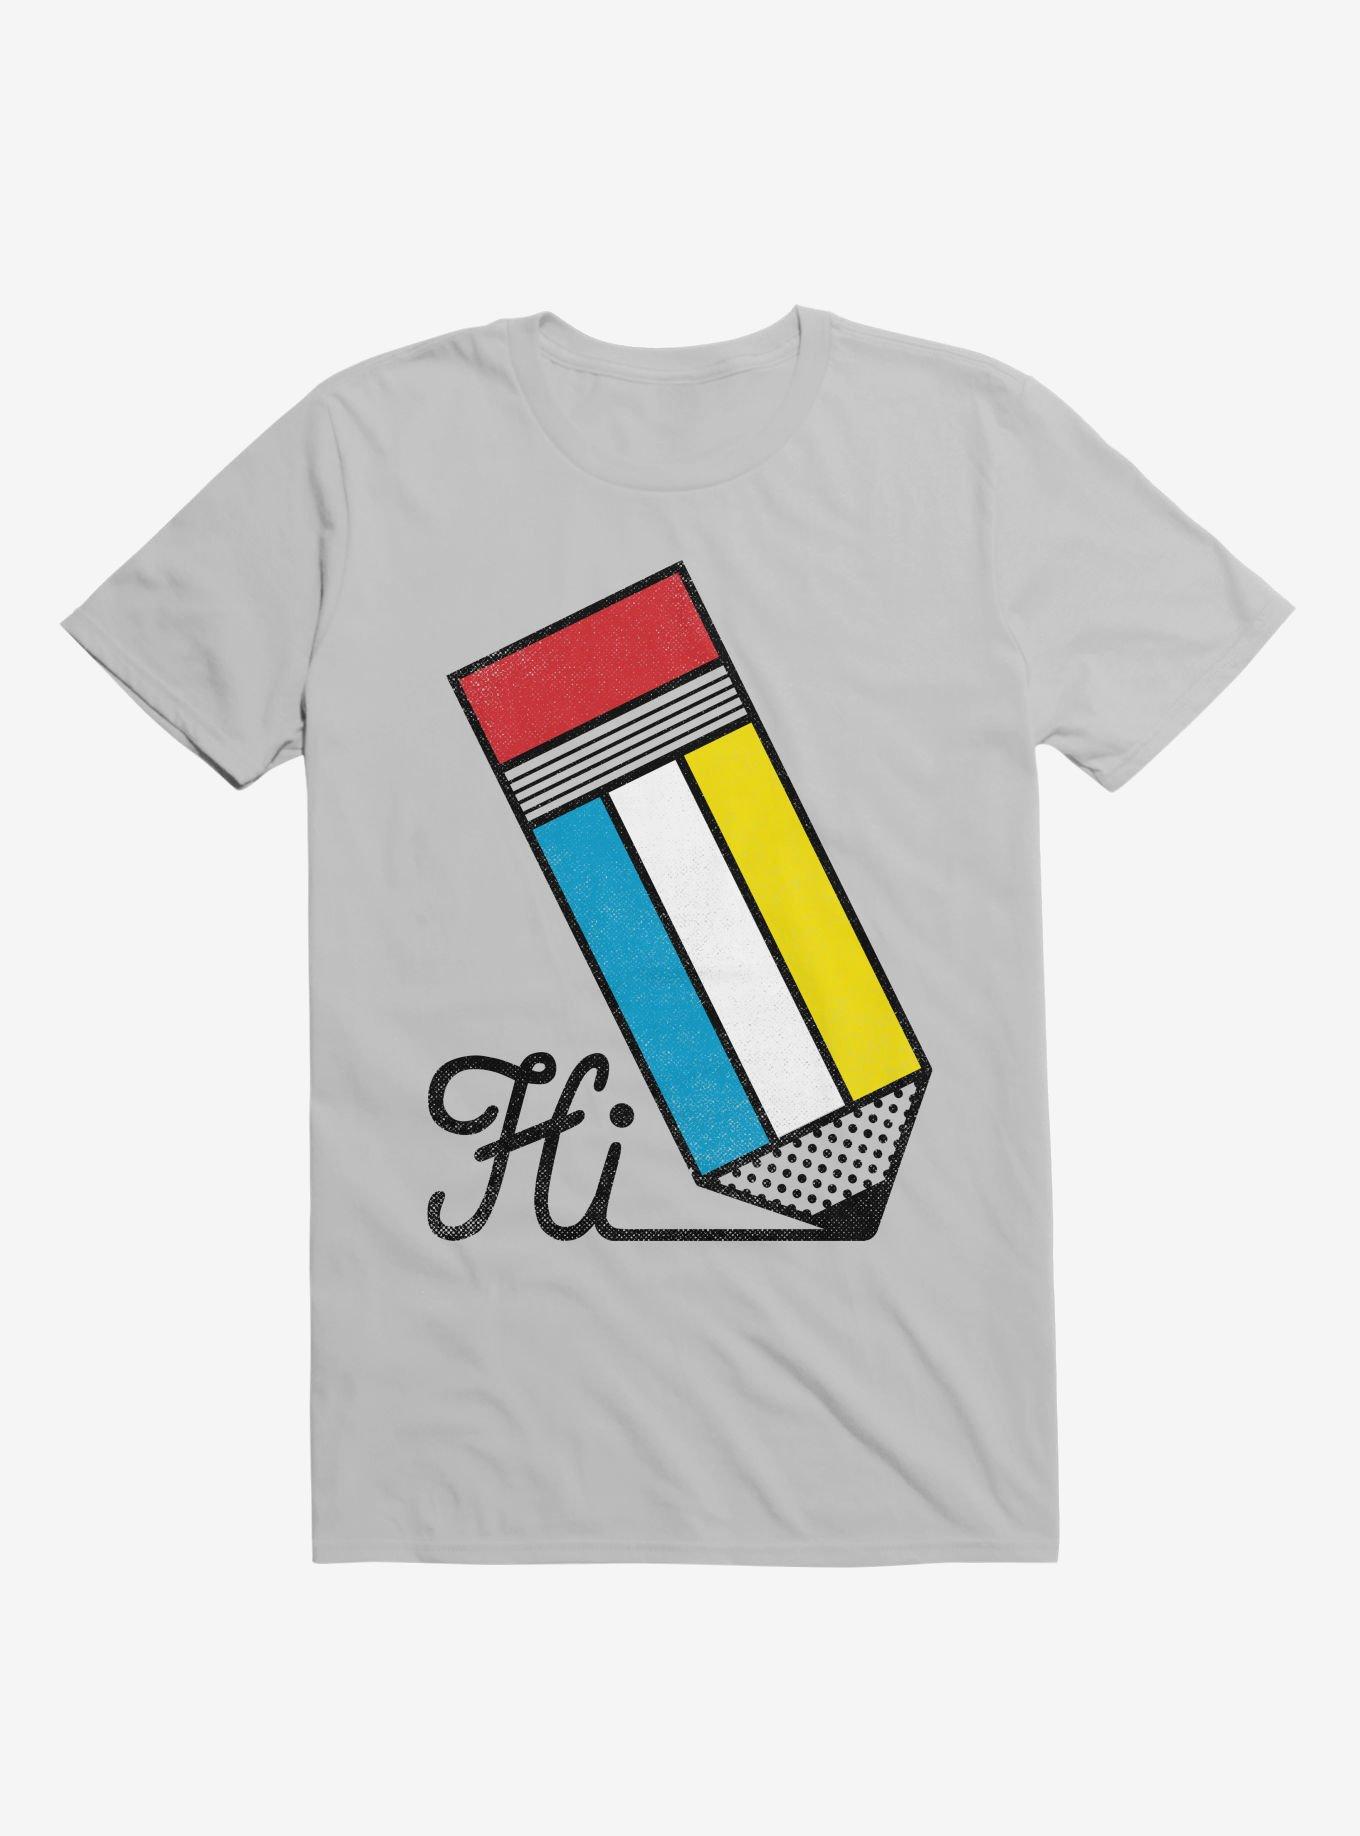 Mondrian Greeting #2 Silver T-Shirt - SILVER | Hot Topic